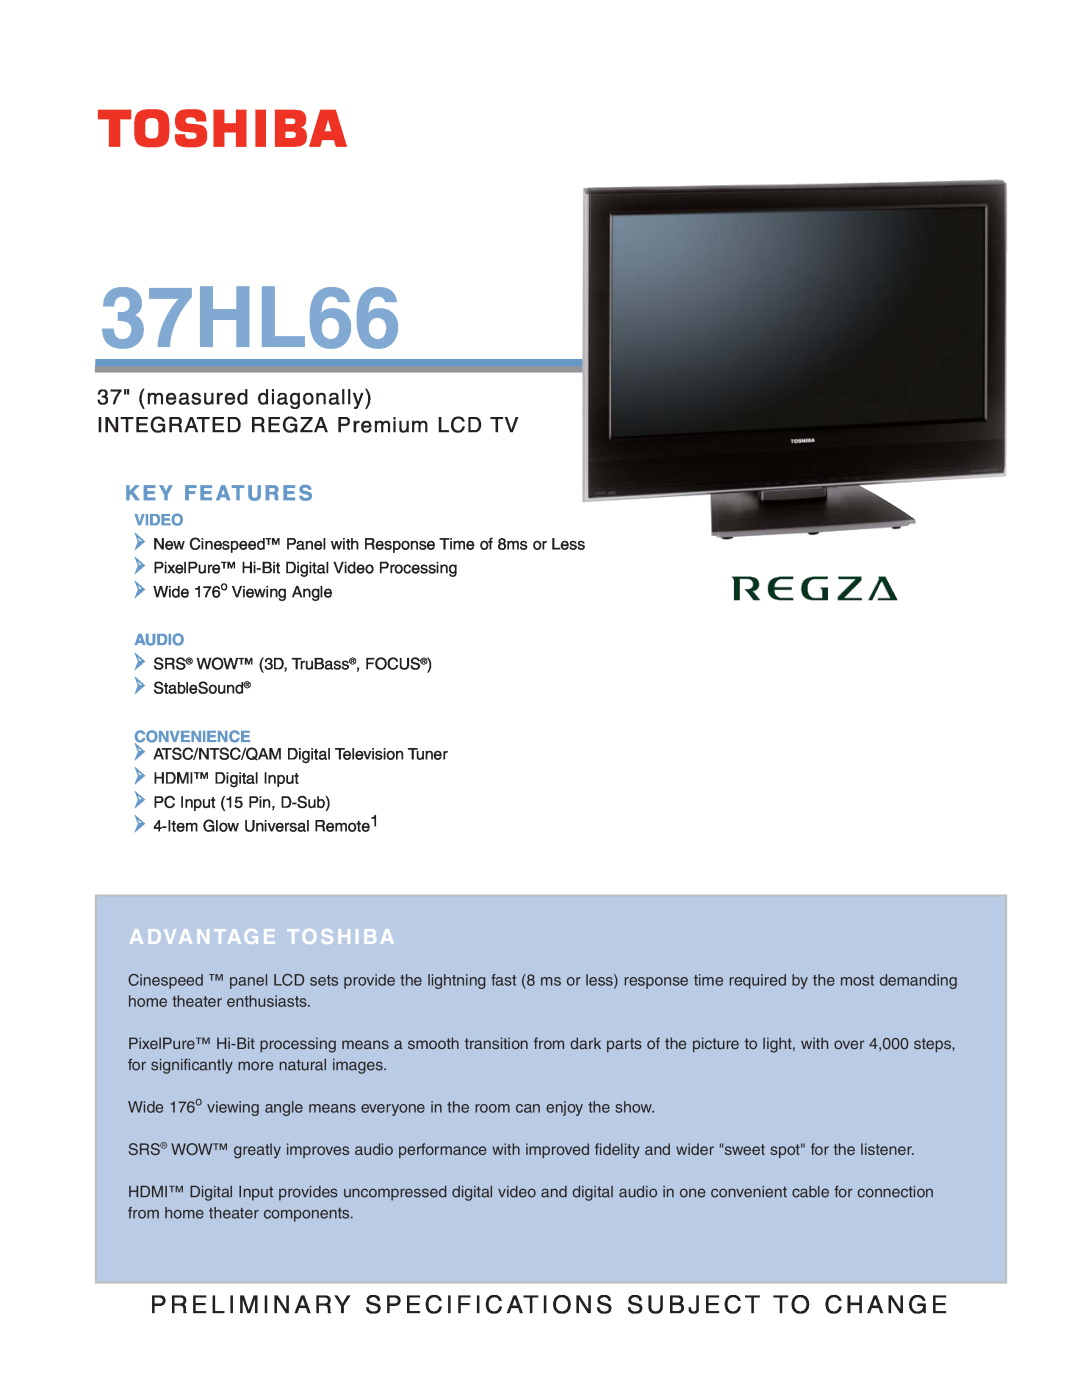 Toshiba 37HL66 specifications Key Features, measured diagonally INTEGRATED REGZA Premium LCD TV, Advantage Toshiba, Video 